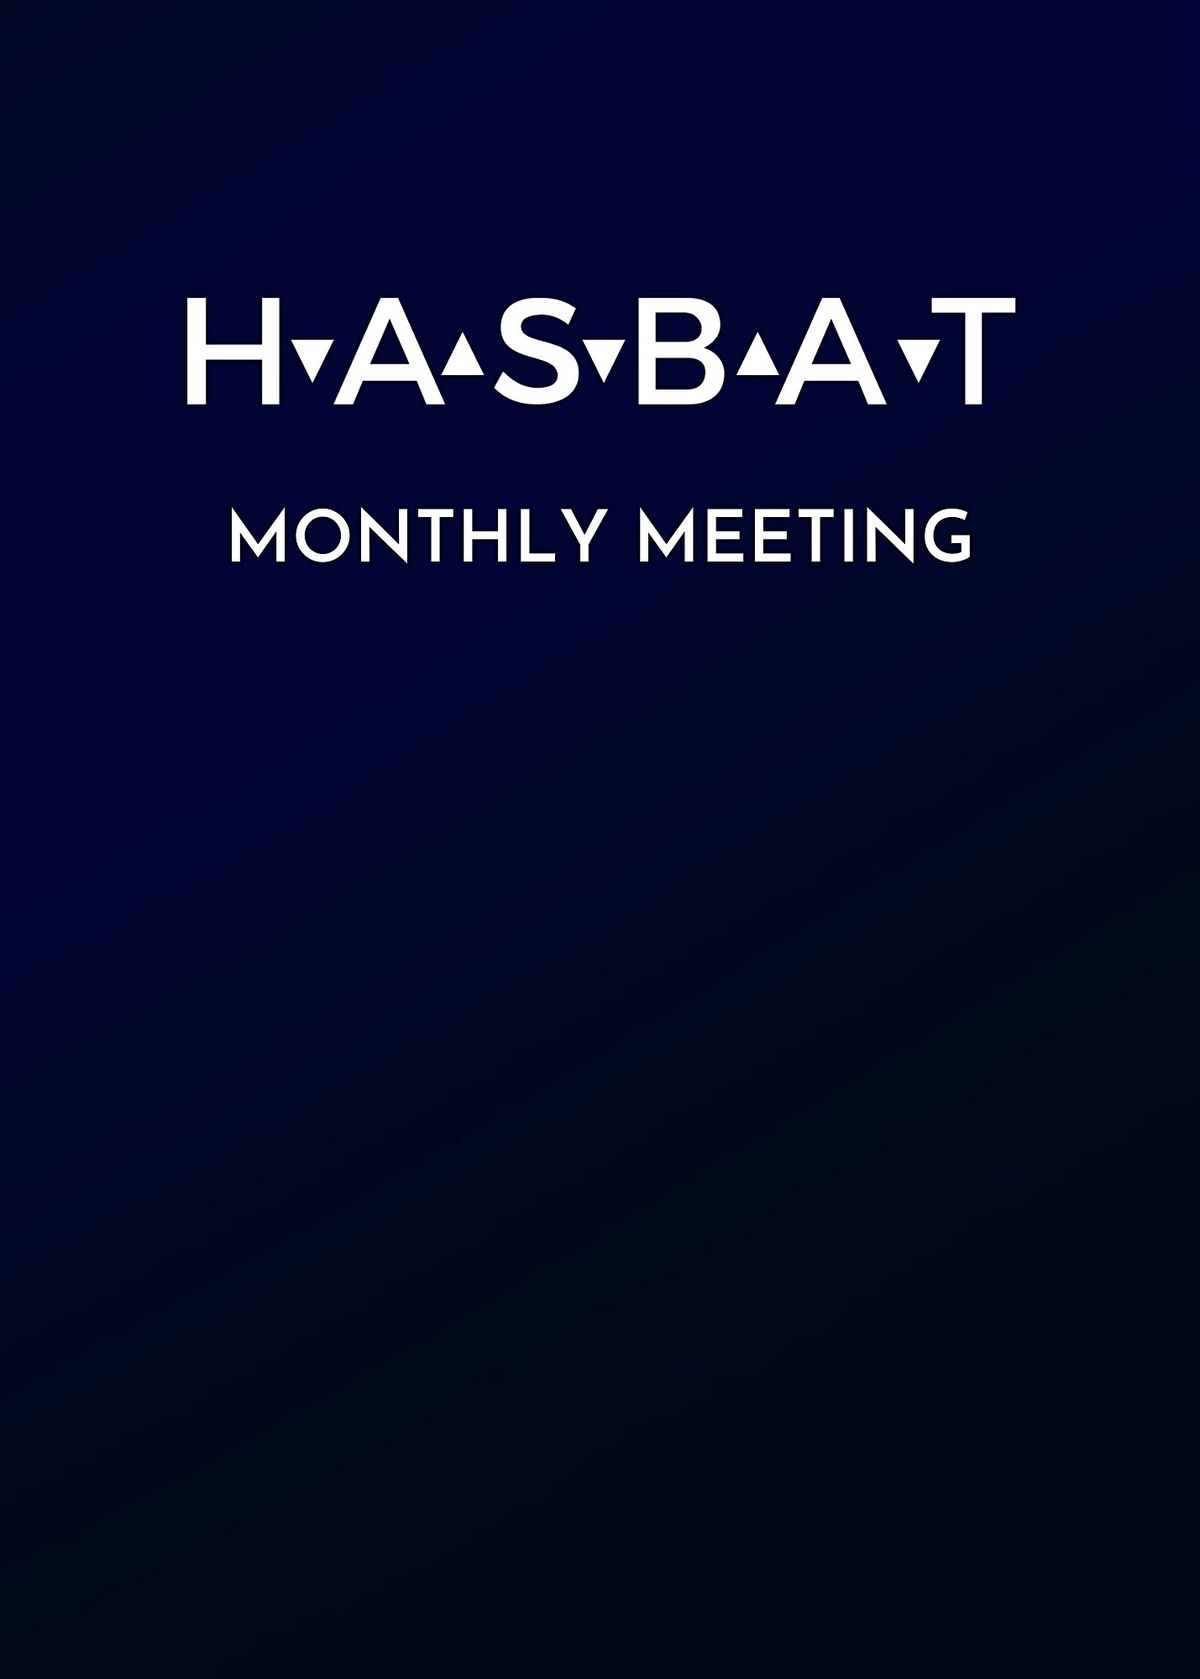 HASBAT Membership Meeting, and Breakfast - July 11th